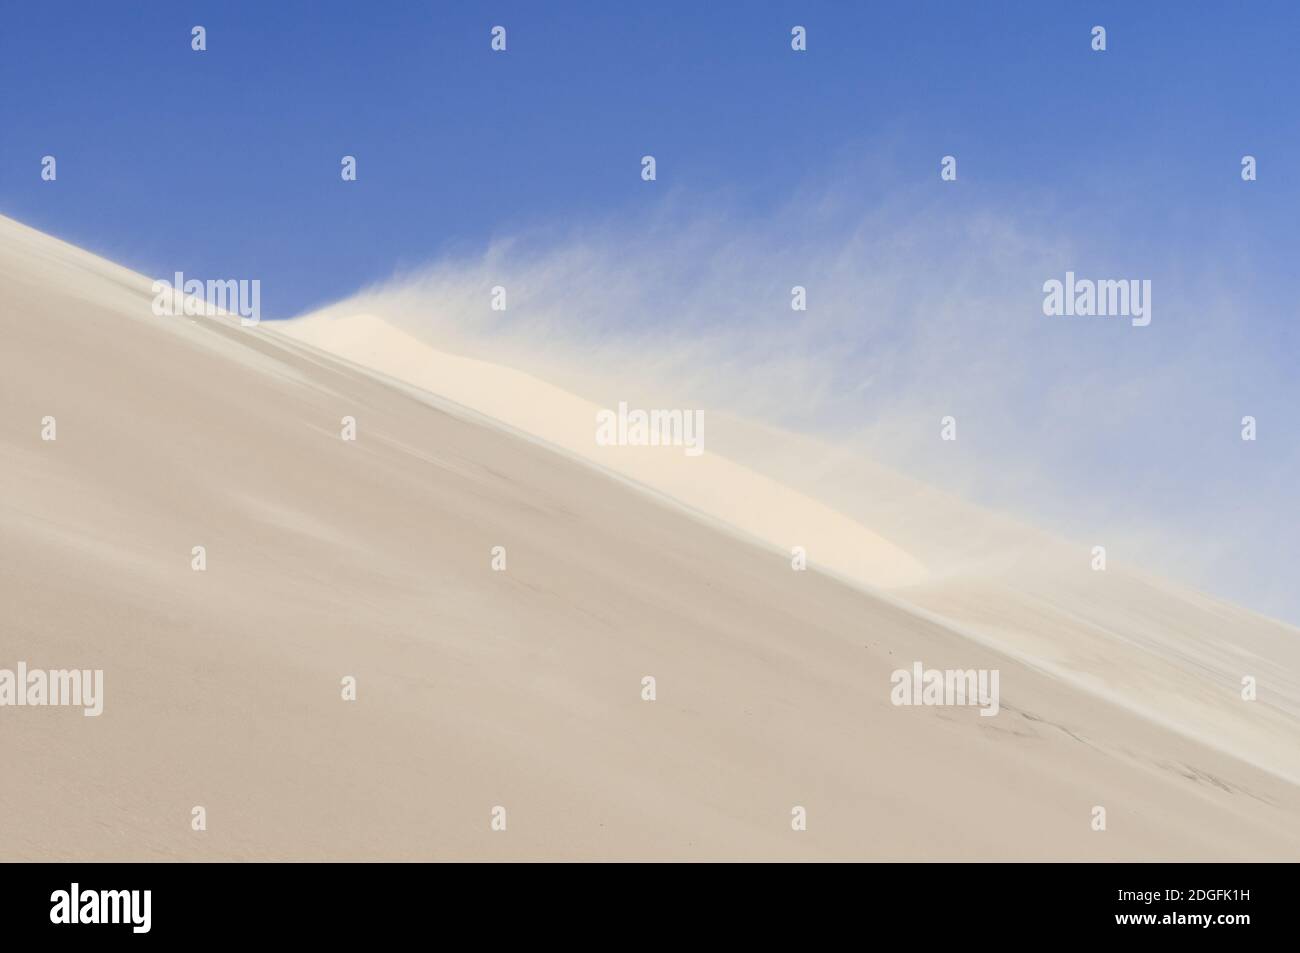 Dunes in Sandstorm at Skeleton Coast, Namib Desert, Namibia, Africa. Stock Photo